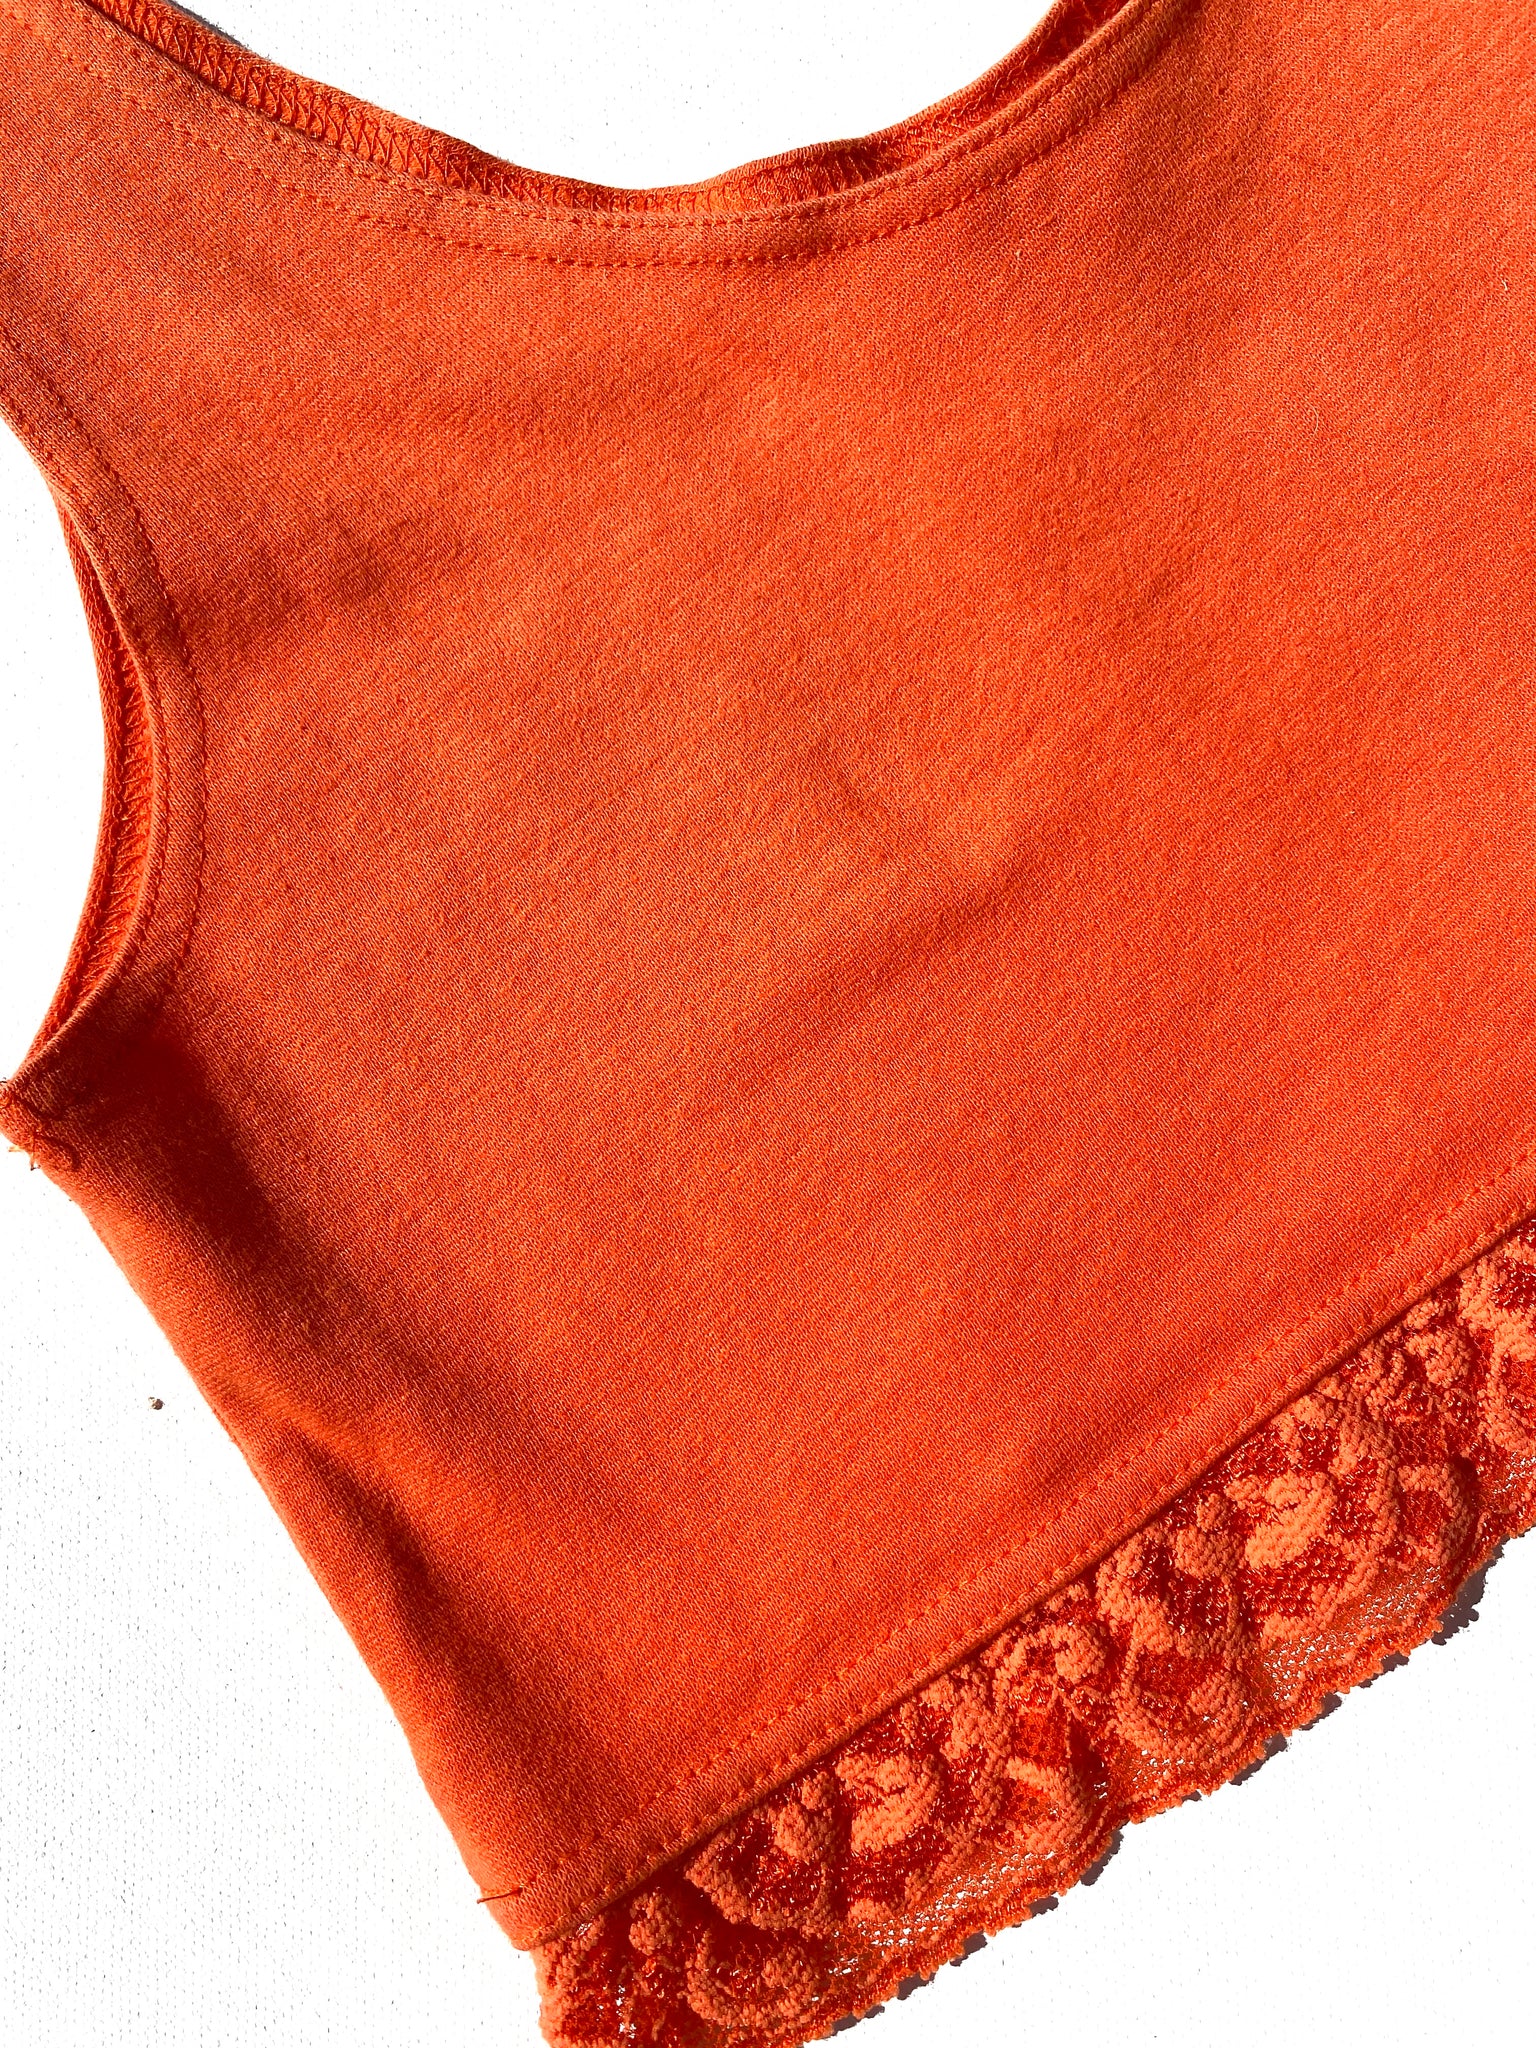 VINTAGE: Crop Top - Orange Lace